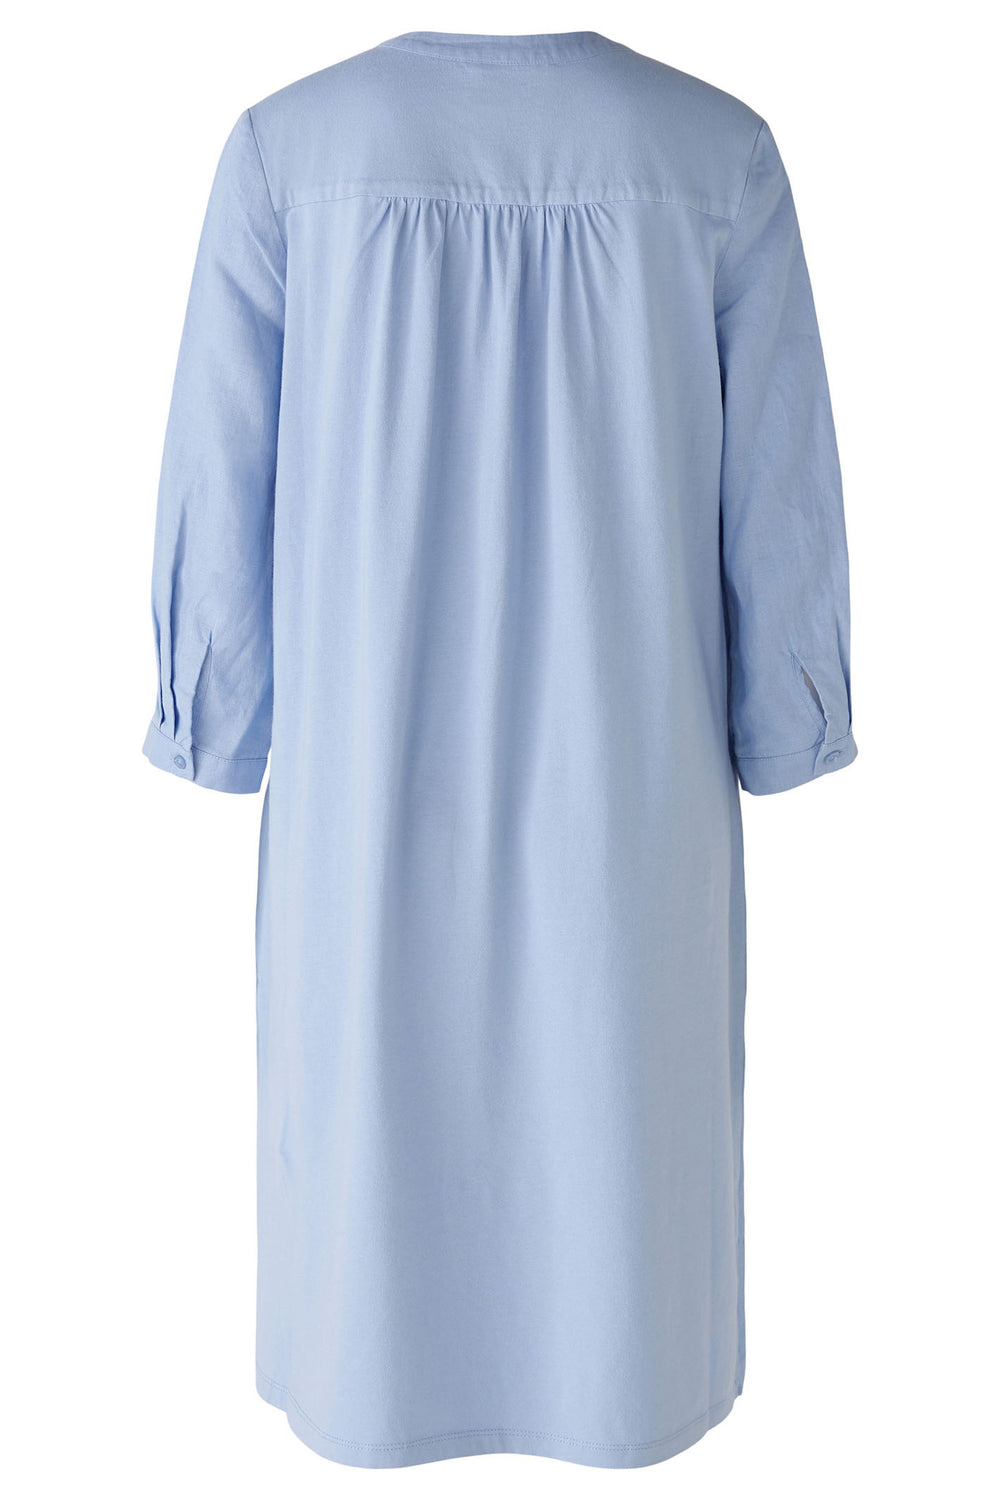 Oui 87560 Light Blue Split Neck Linen Dress - Olivia Grace Fashion